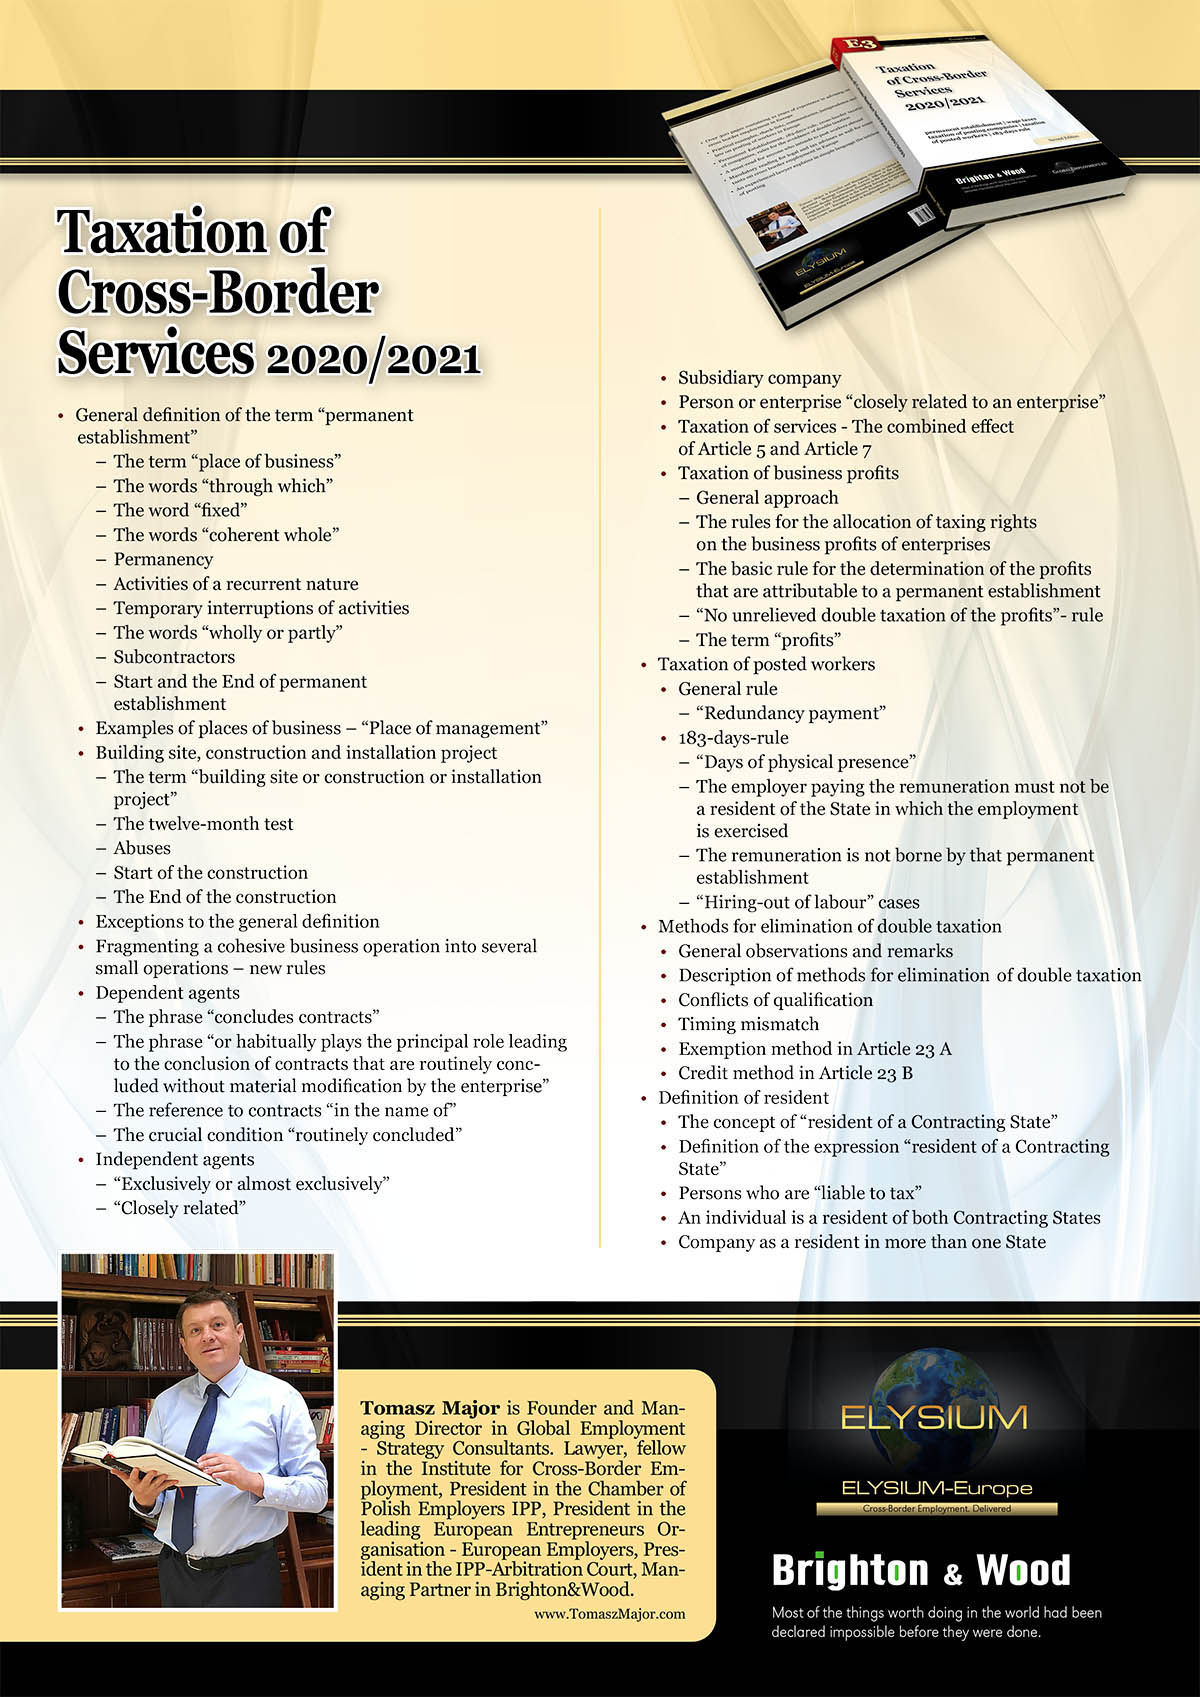 E3 -Taxation of Cross-Border Services in 2020-2021